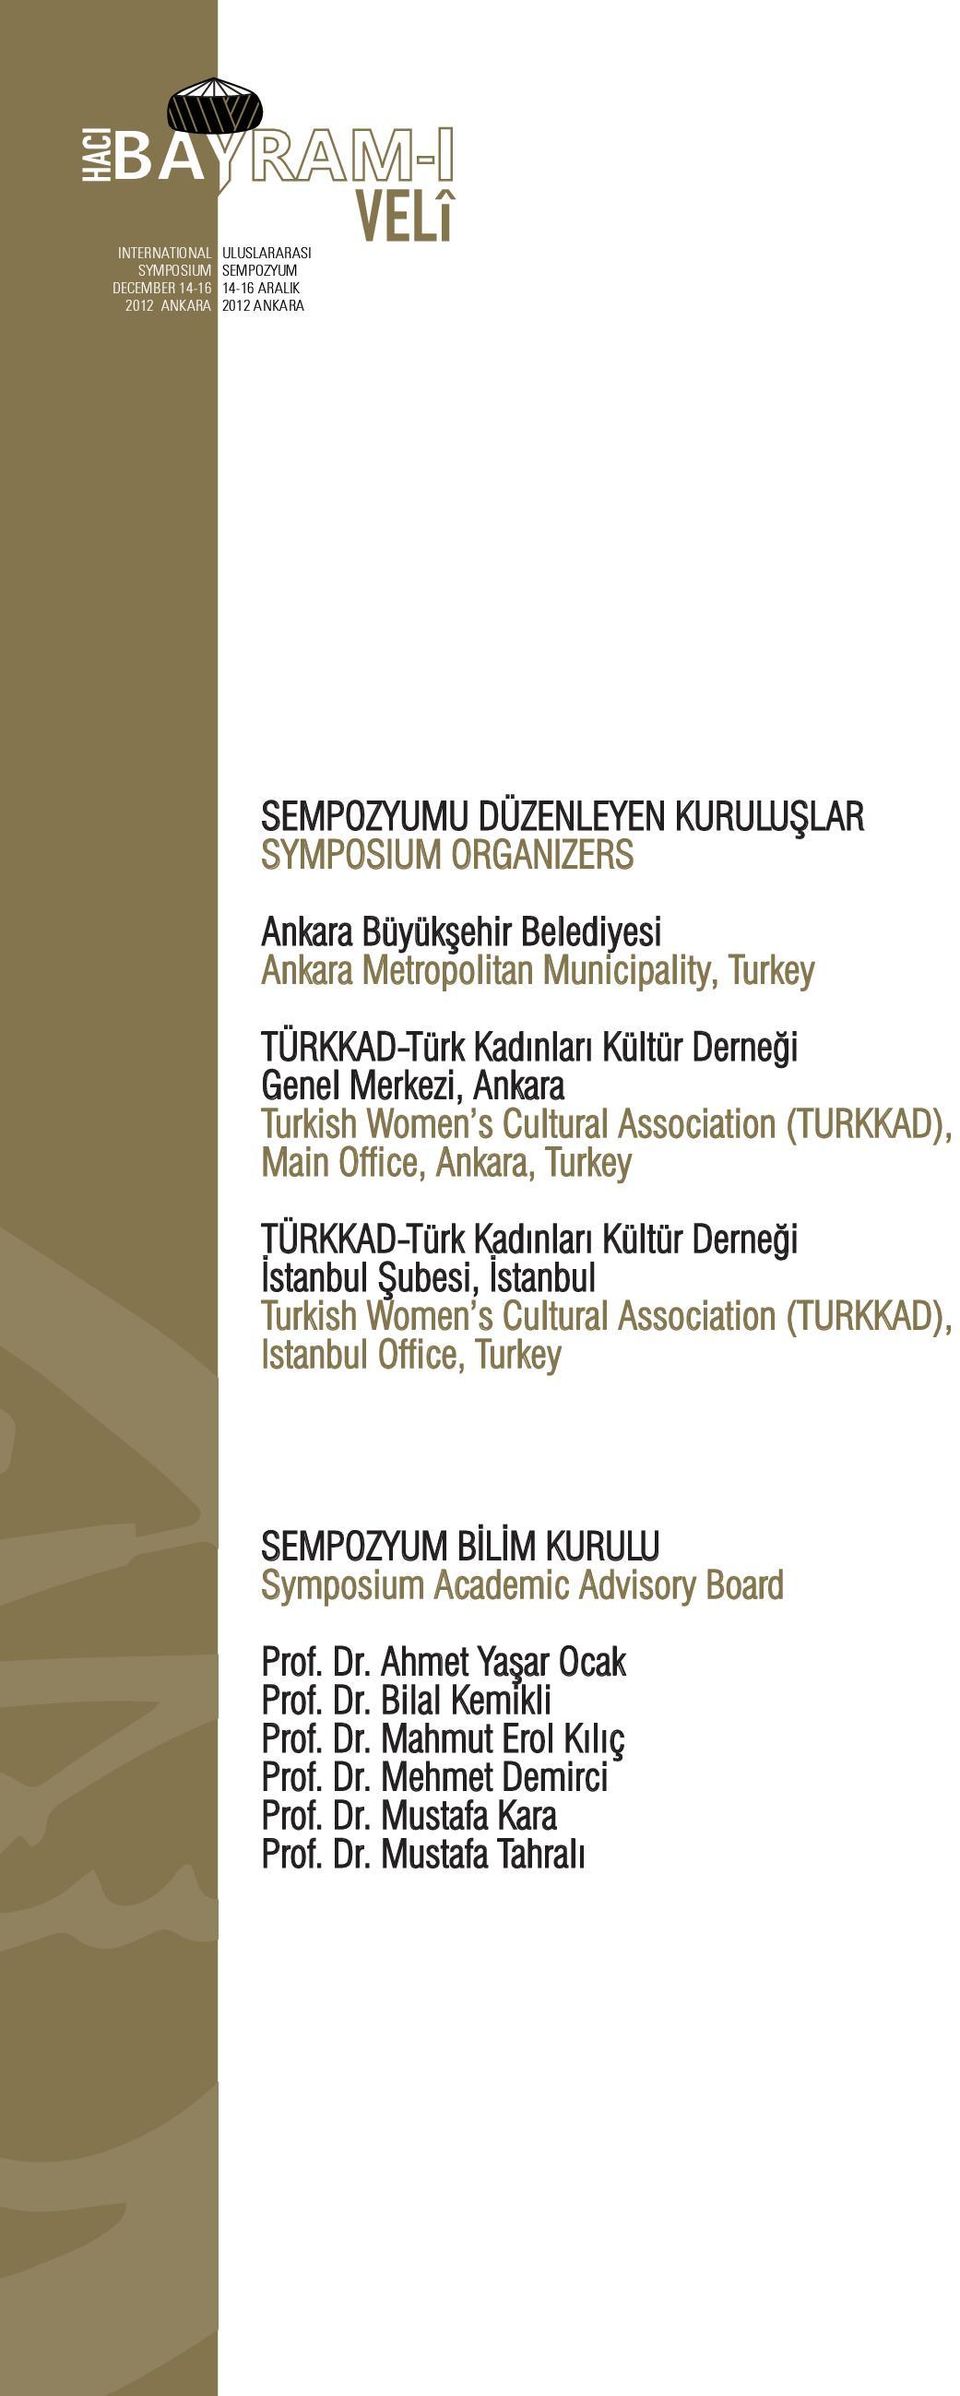 İstanbul Şubesi, İstanbul Turkish Women s Cultural Association (TURKKAD), Istanbul Office, Turkey SEMPOZYUM BİLİM KURULU Symposium Academic Advisory